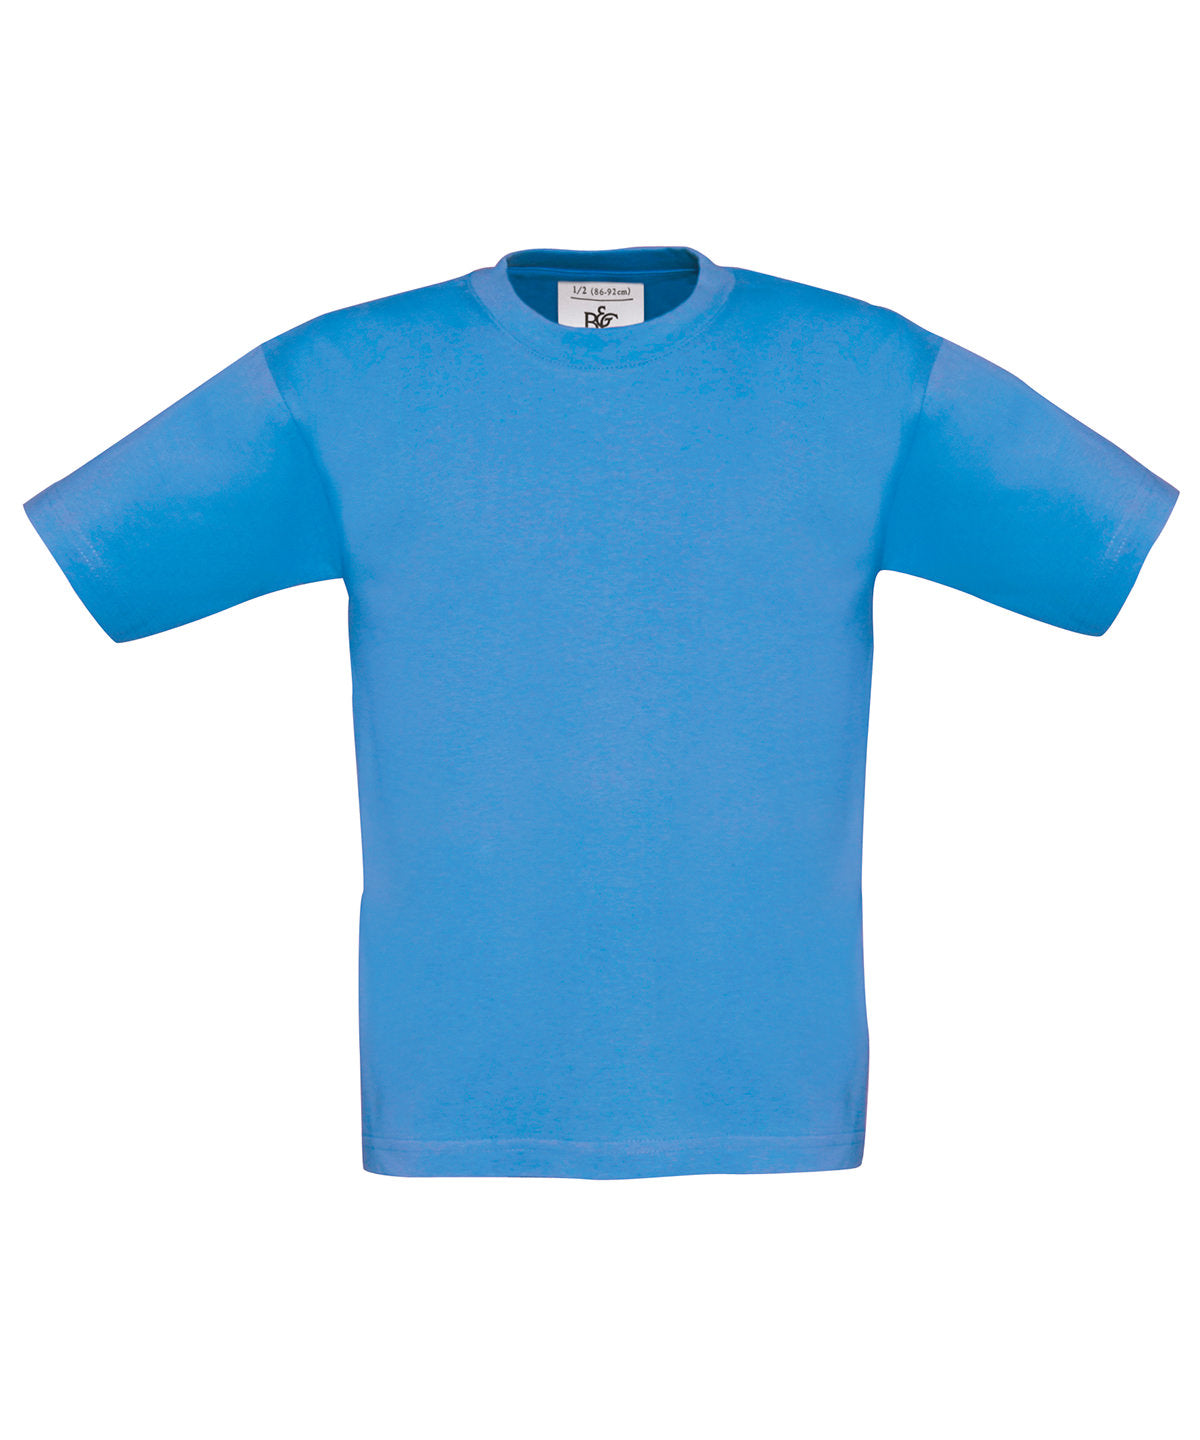 Personalised T-Shirts - Mid Orange B&C Collection B&C Exact 150 /kids